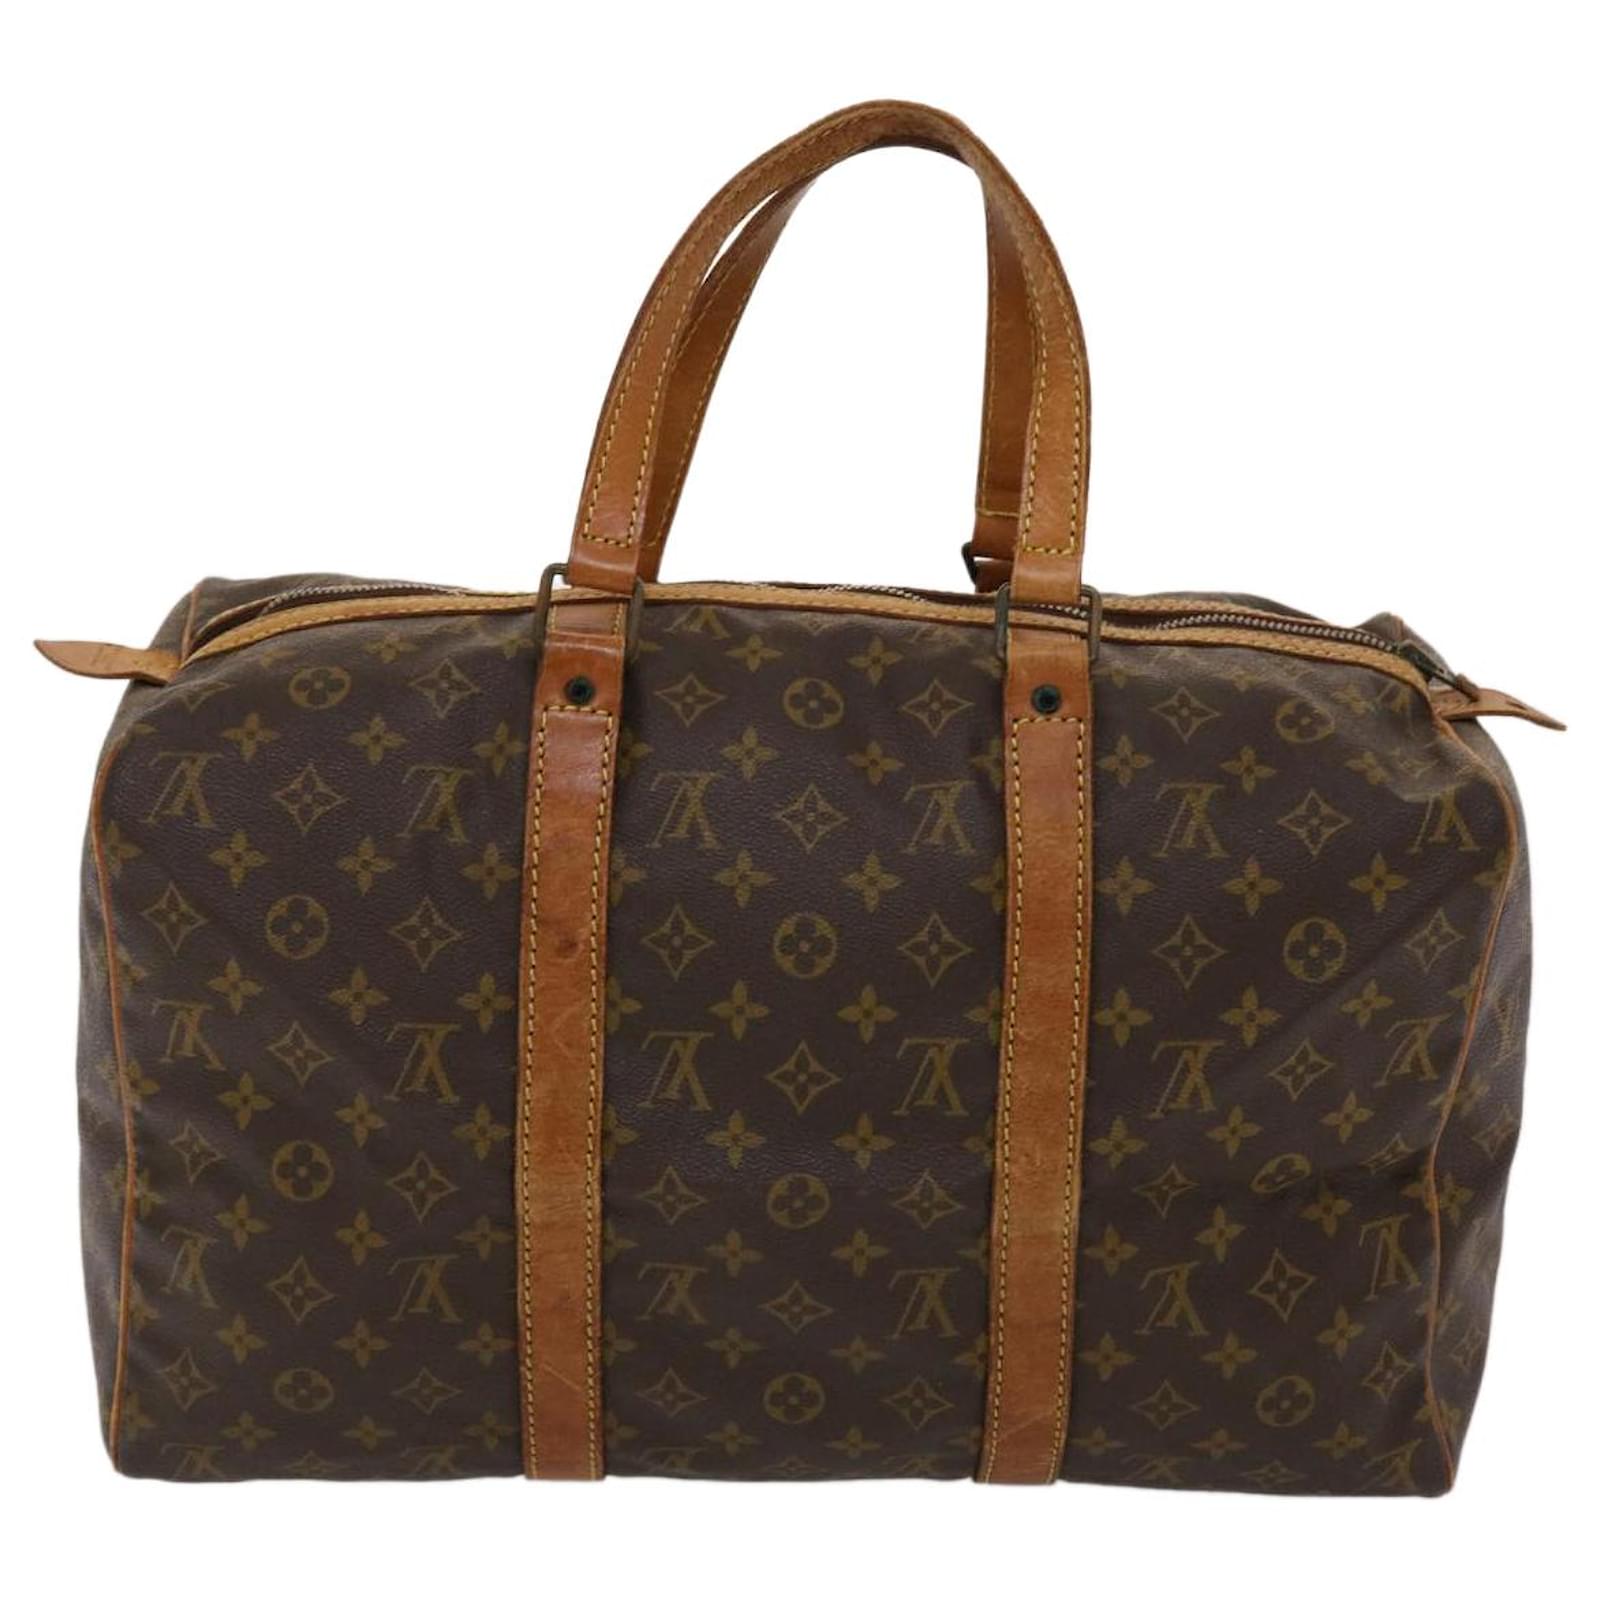 Vintage LOUIS VUITTON Sac Flanerie 45 Duffle M51115 Tote Shopper Bag Travel  Bag